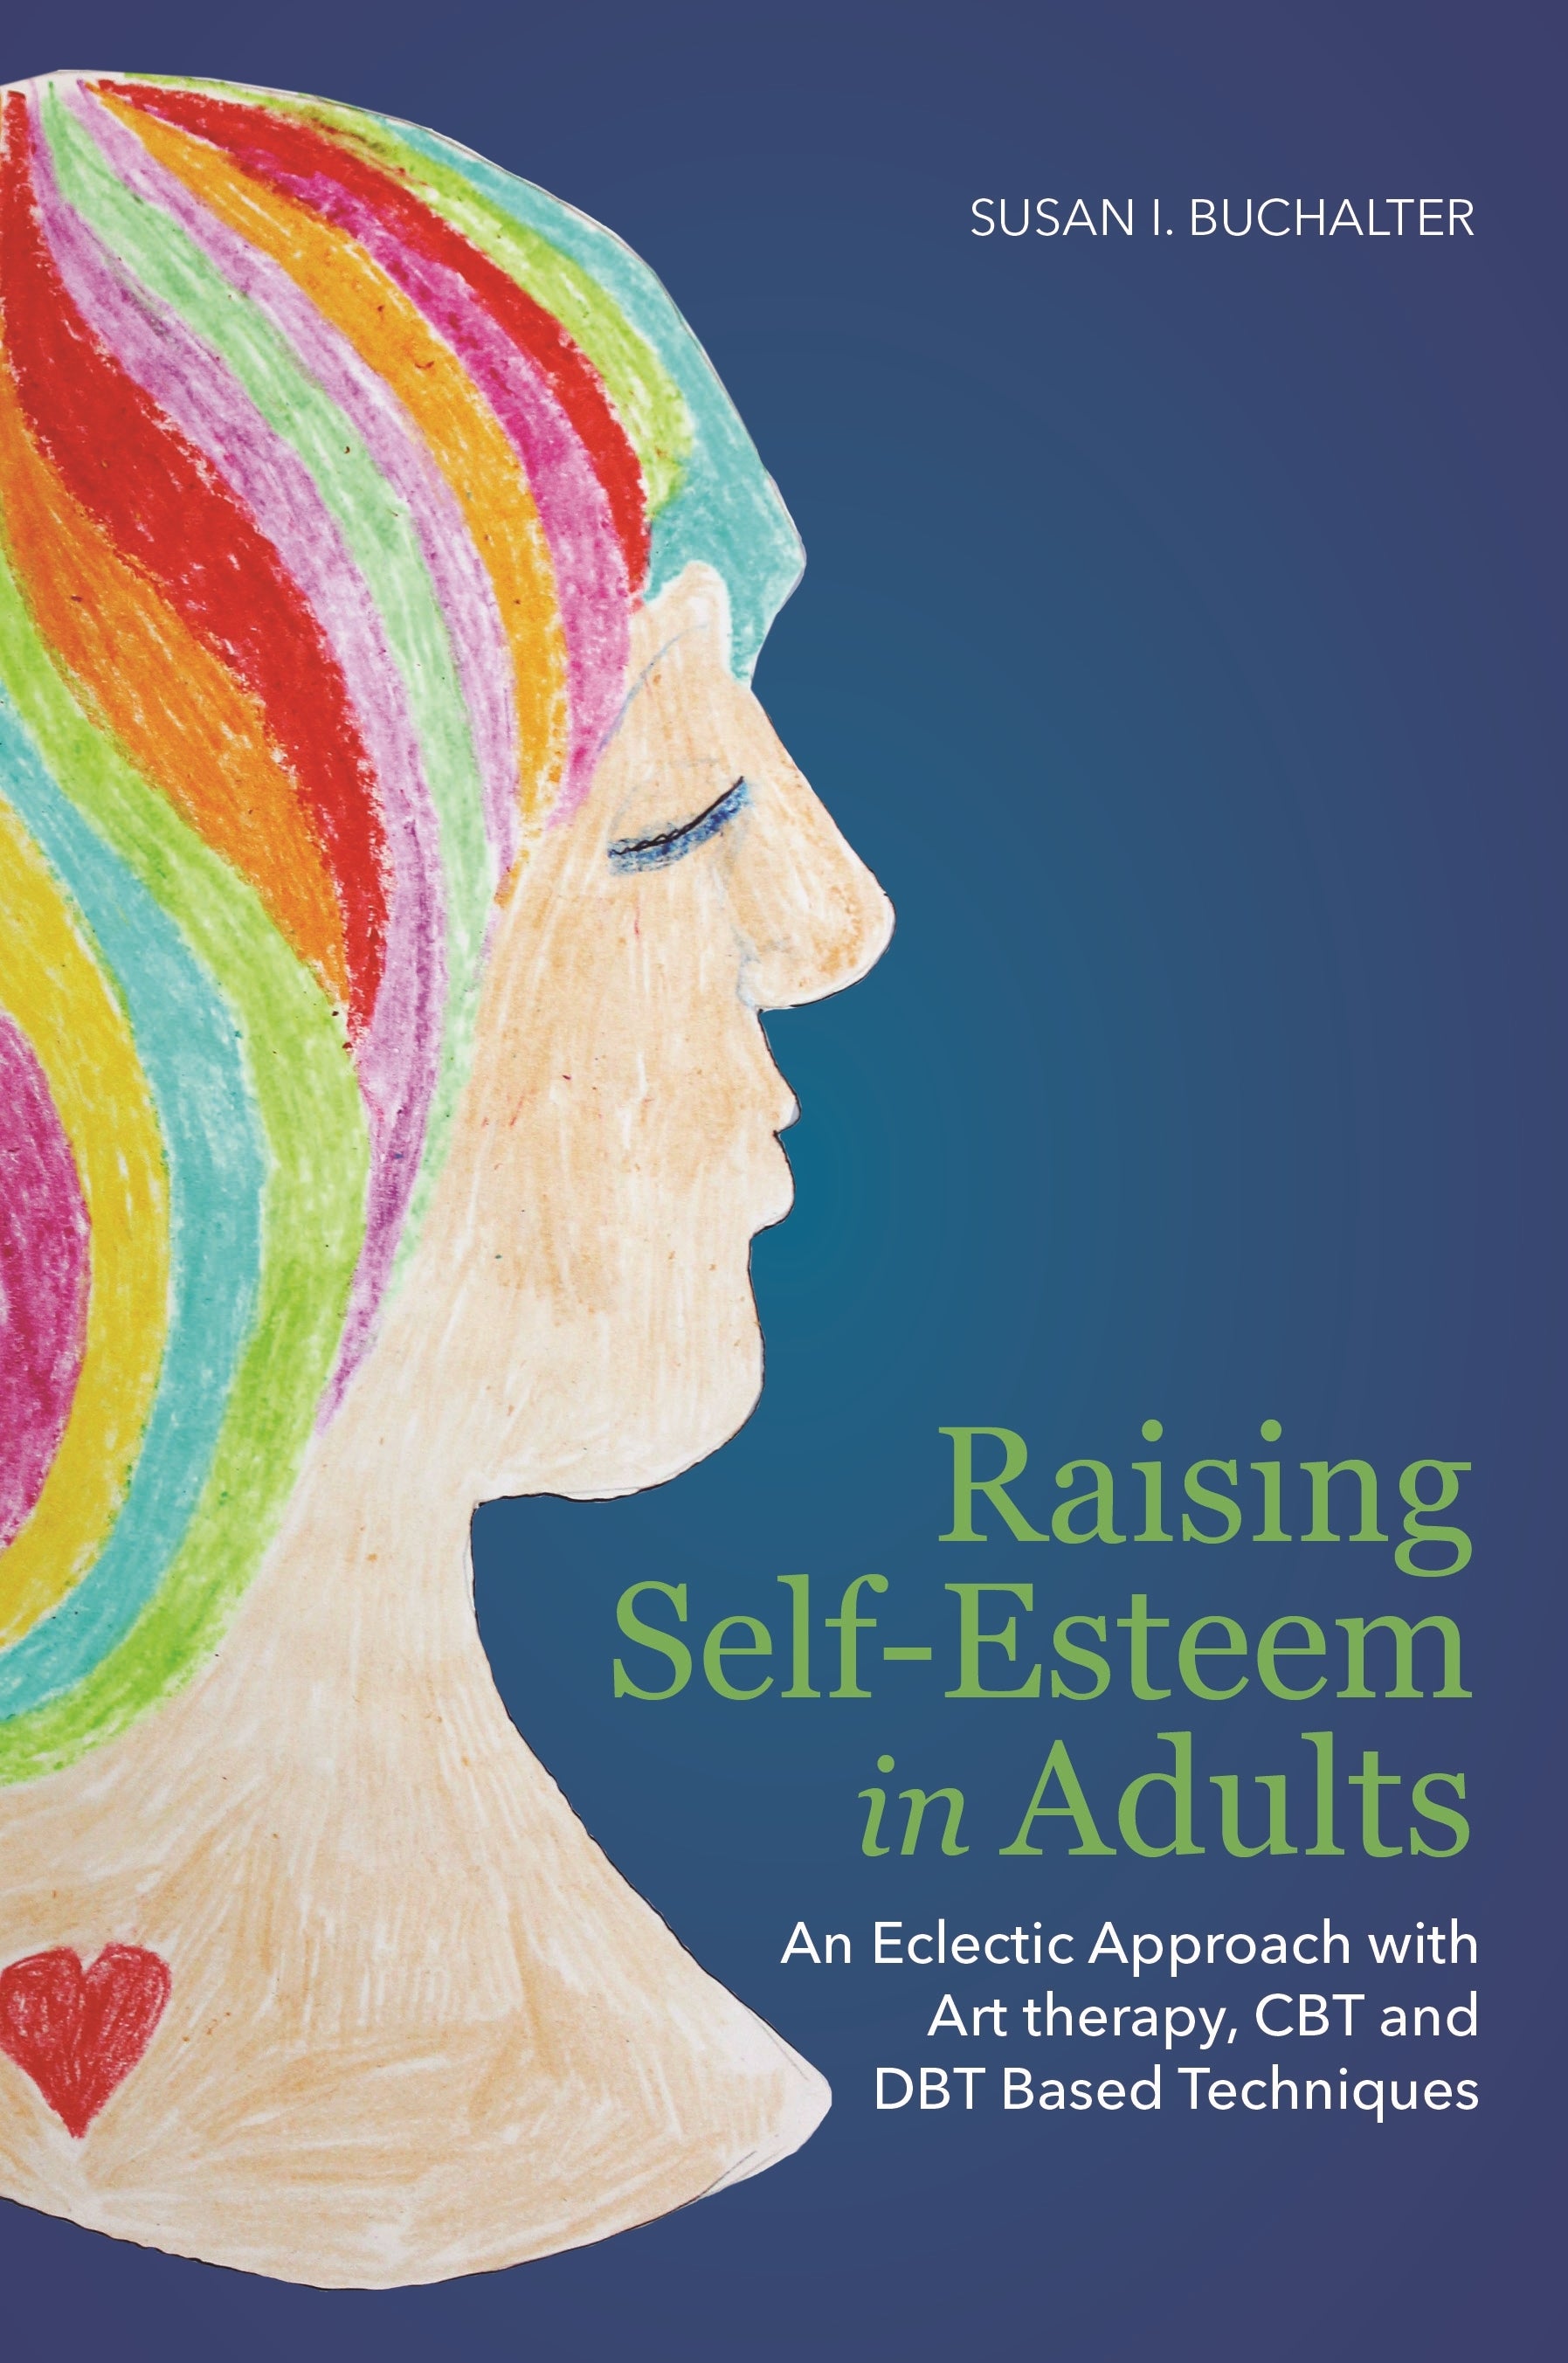 Raising Self-Esteem in Adults by Susan Buchalter